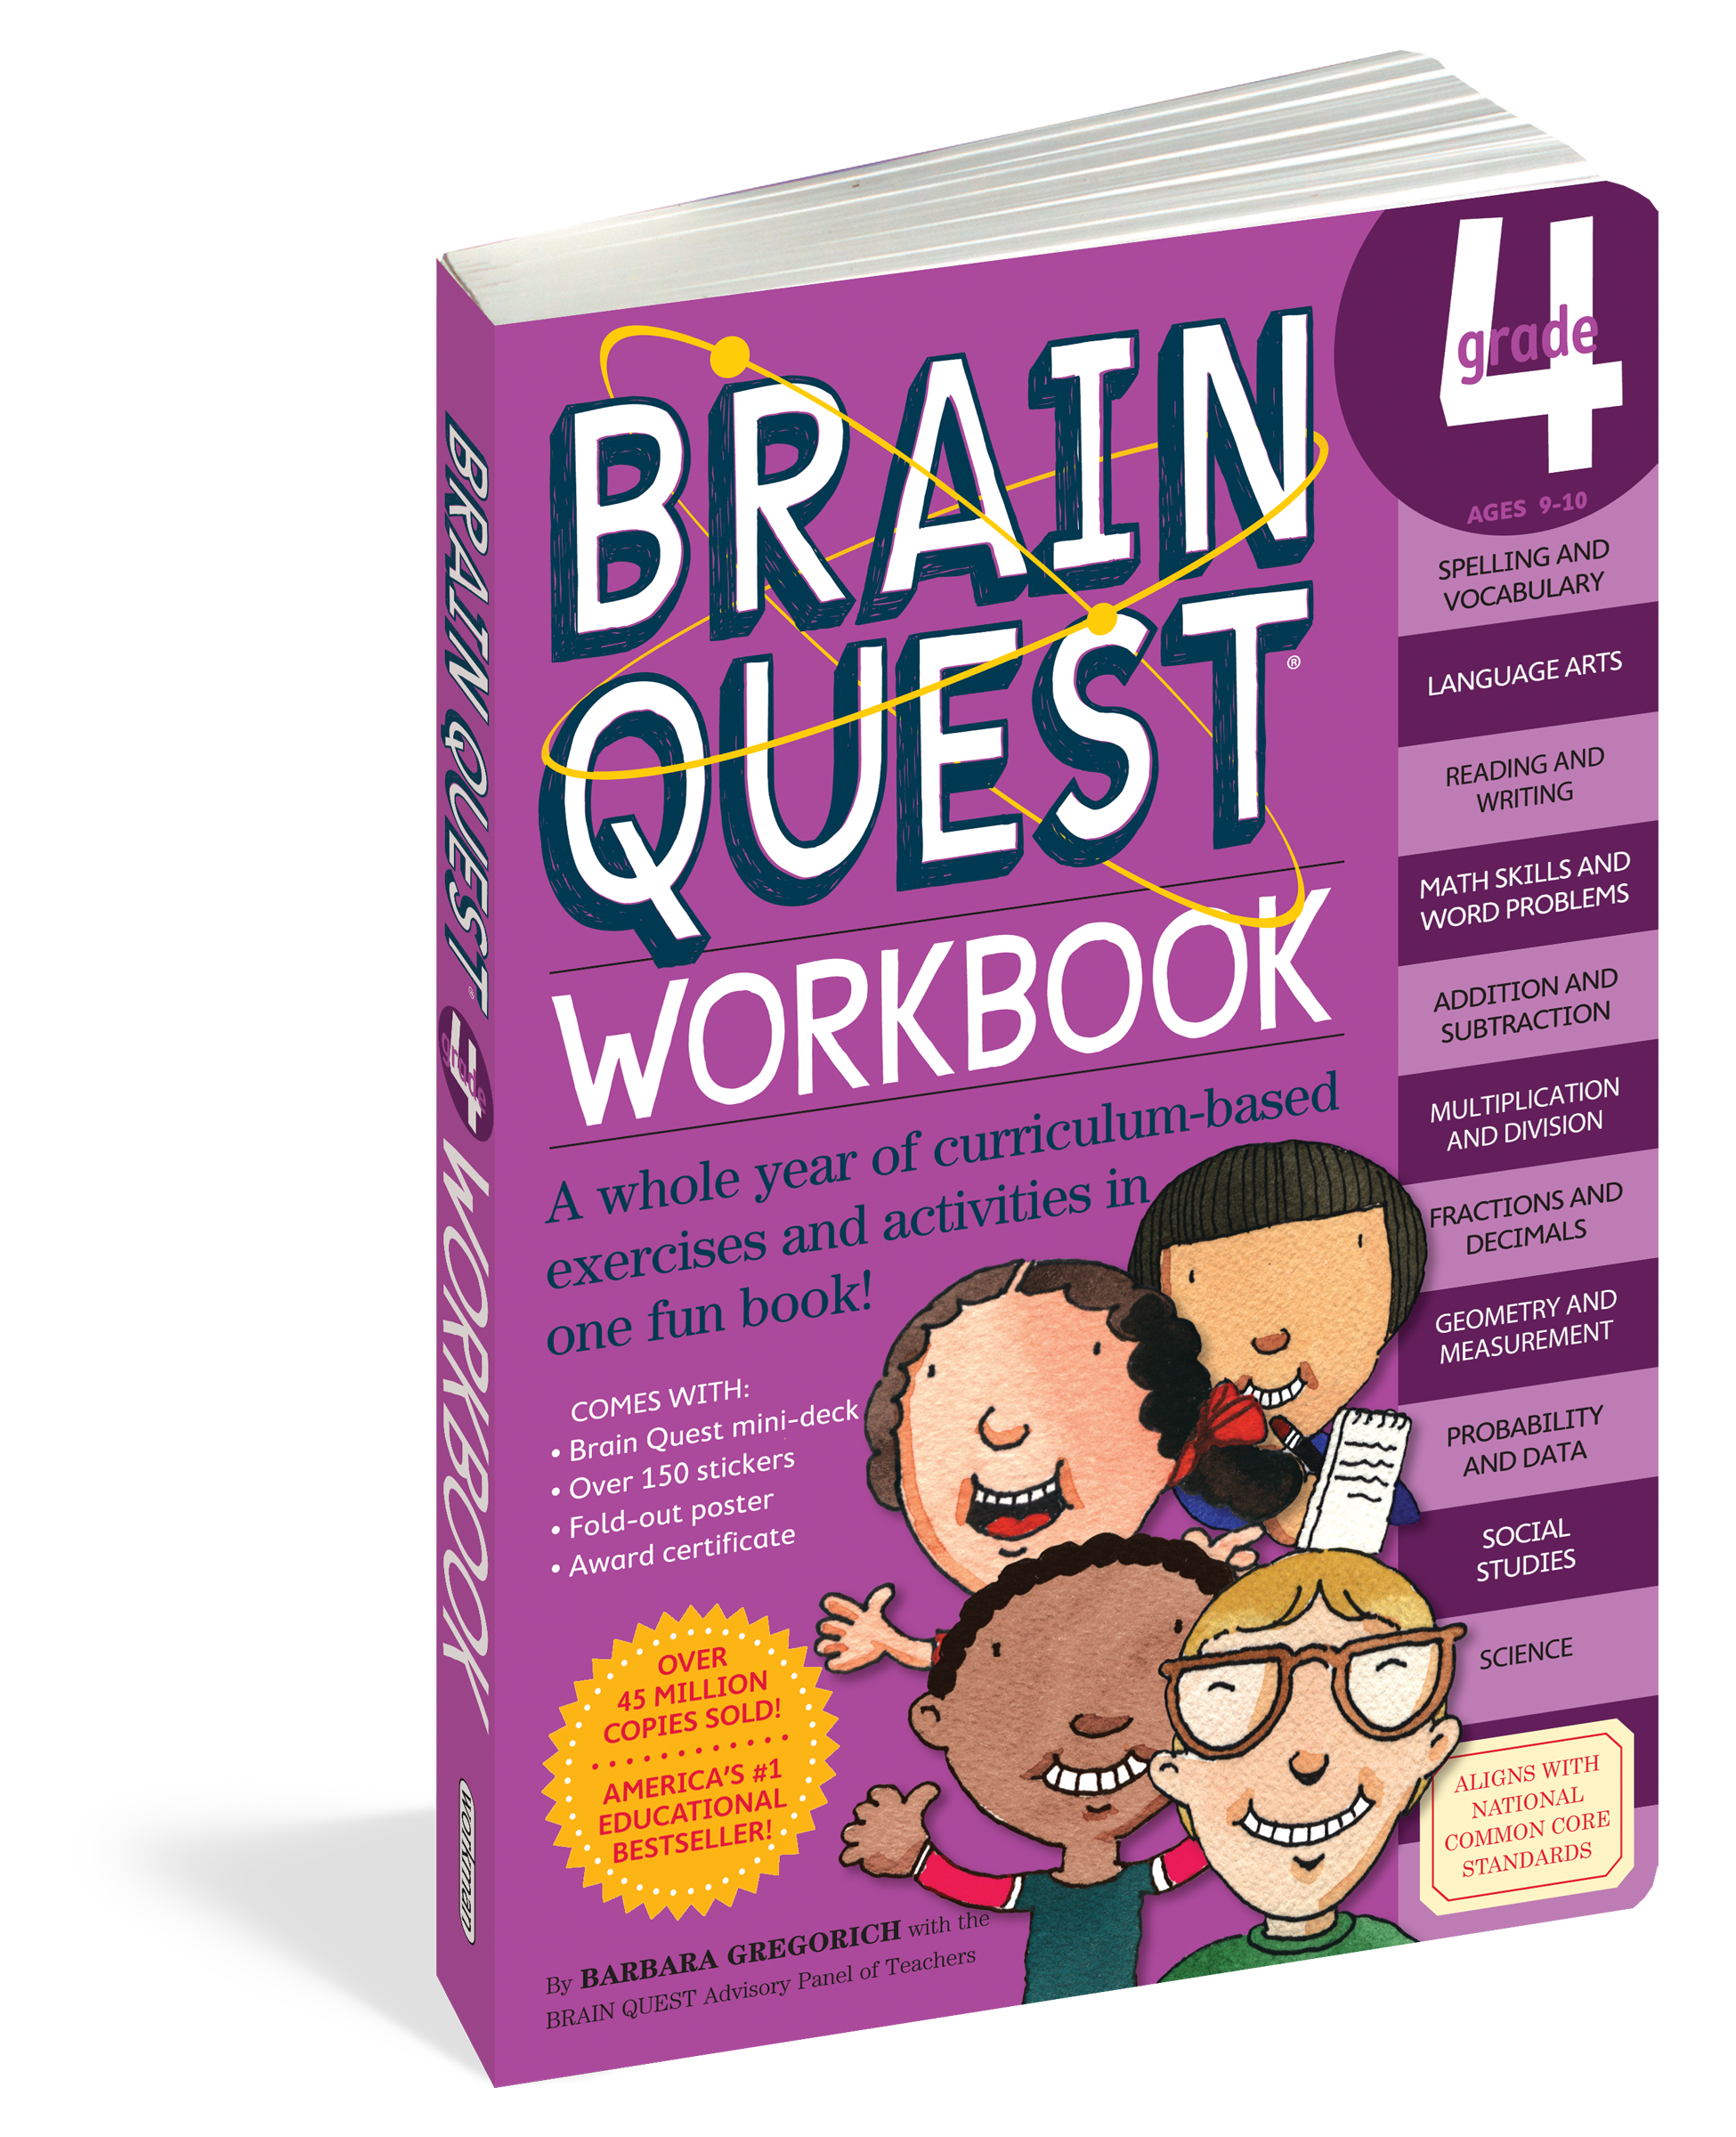 Brain Quest Workbook: 4th Grade